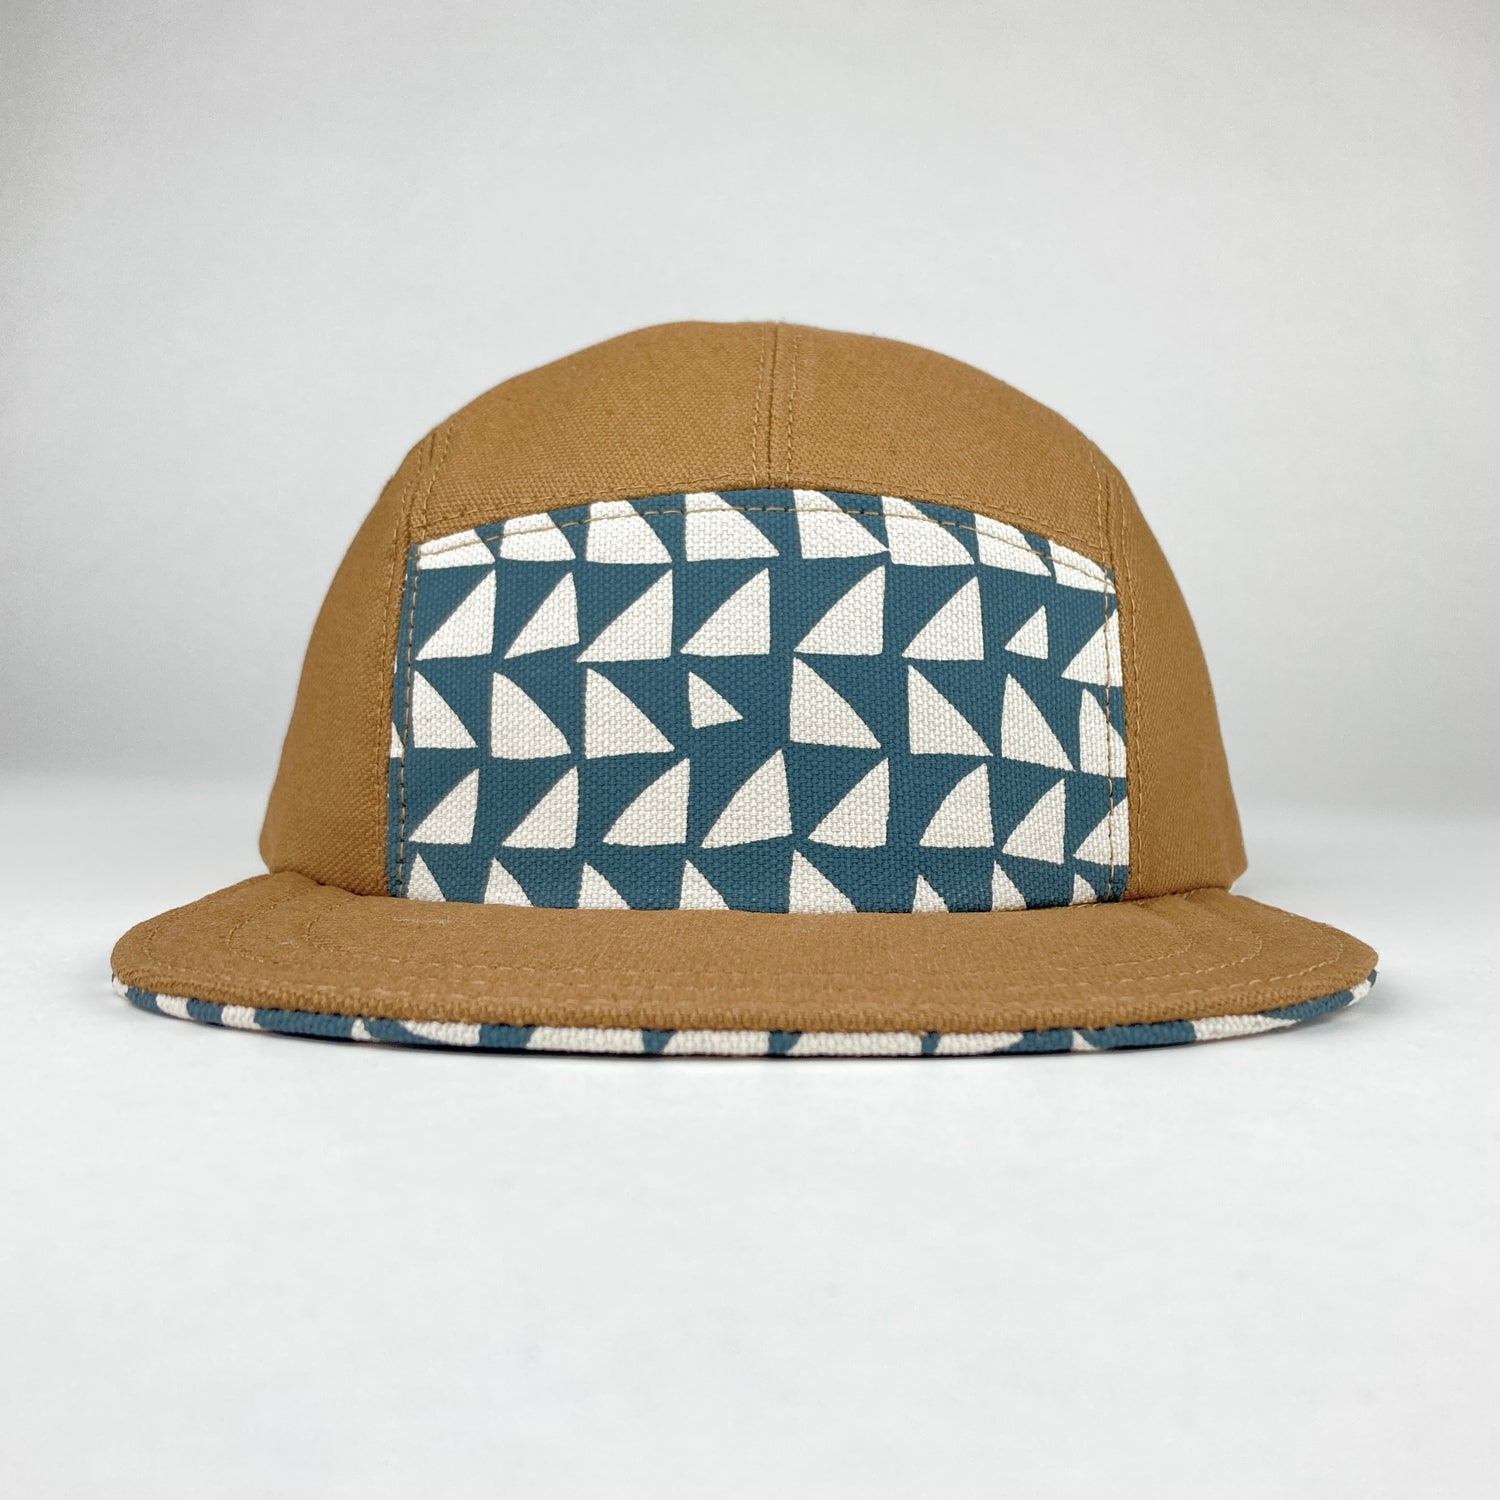 Hand Printed Camp Hats